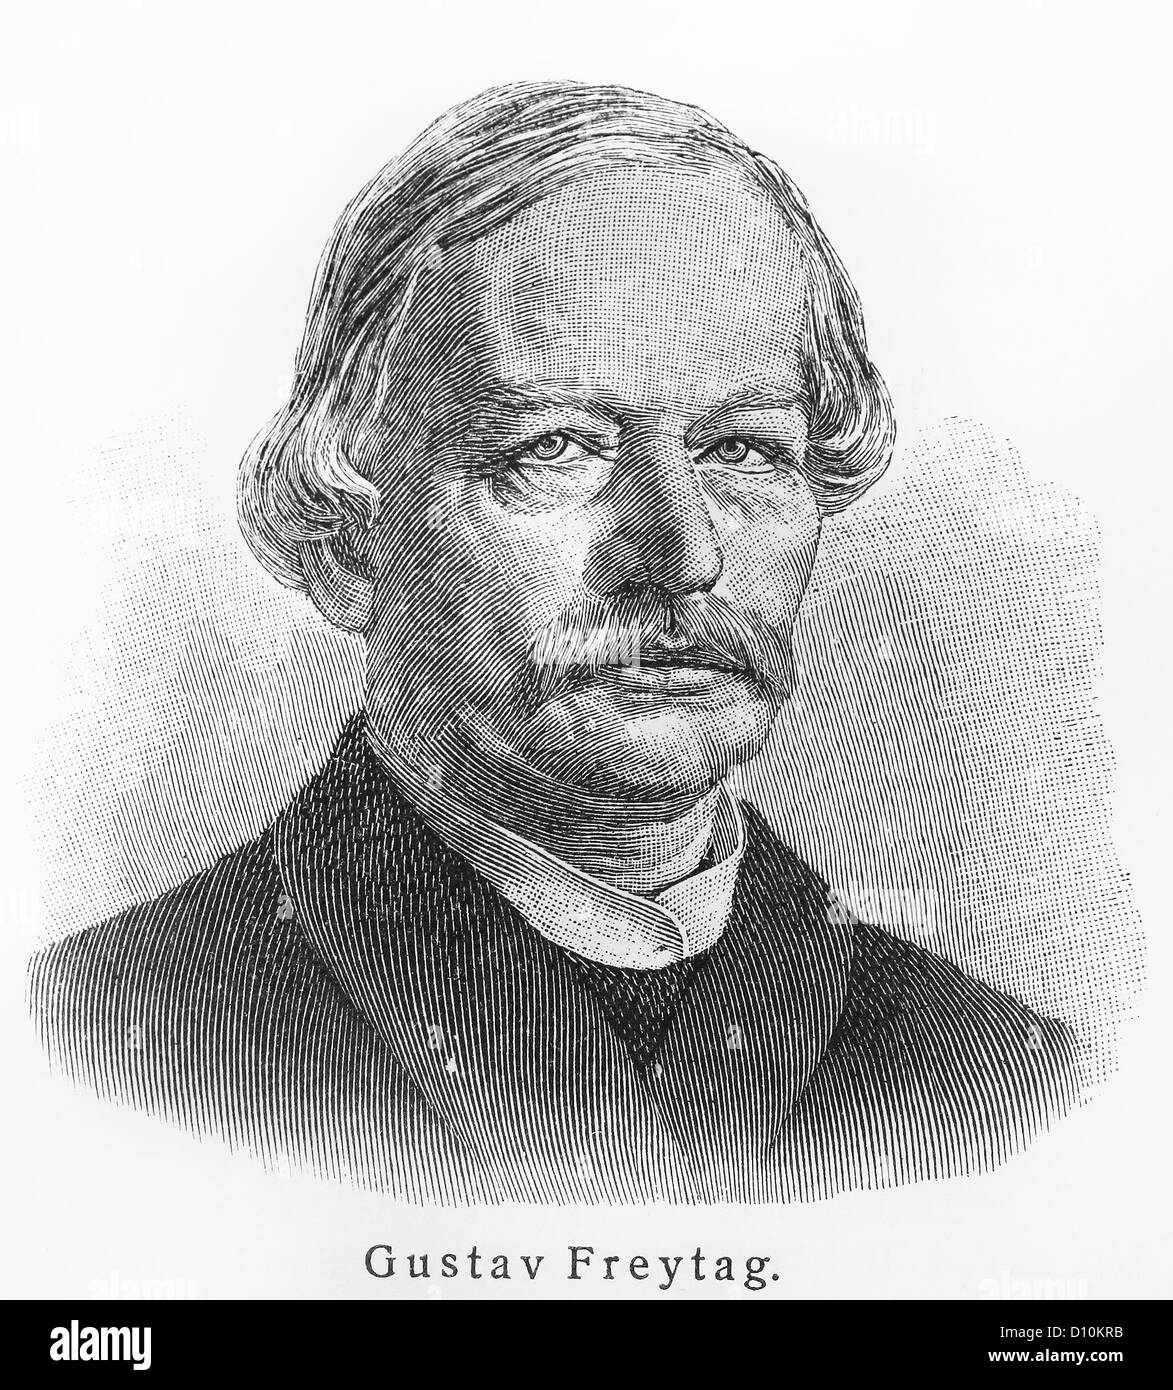 Gustav Freytag vintage drawing Stock Photo